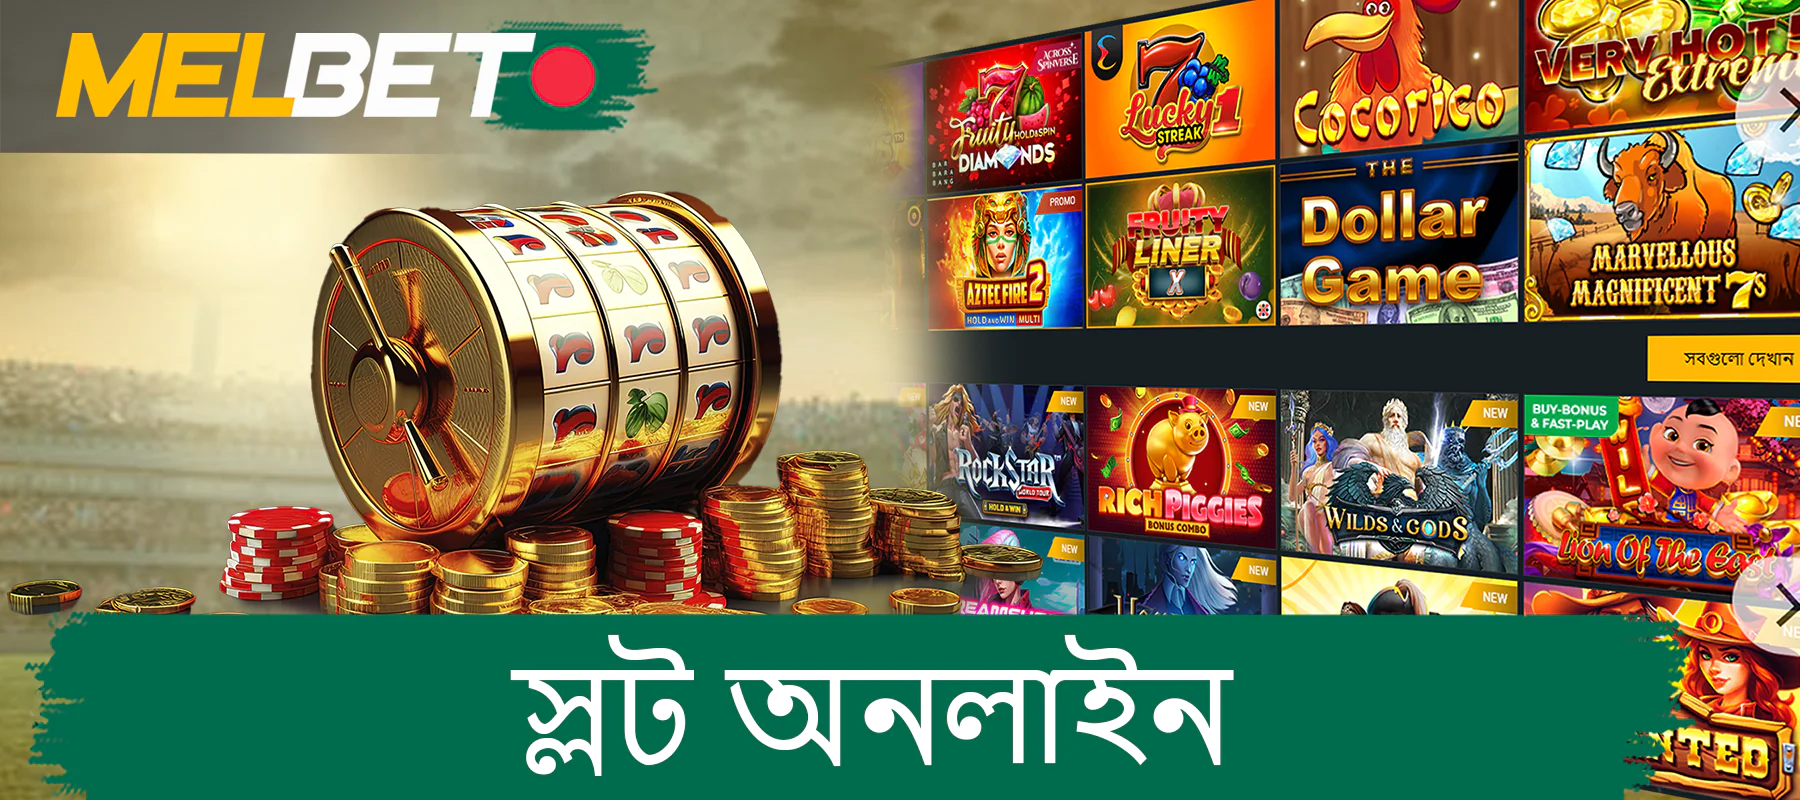 Melbet Bangladesh: The Leading Online Betting Platform